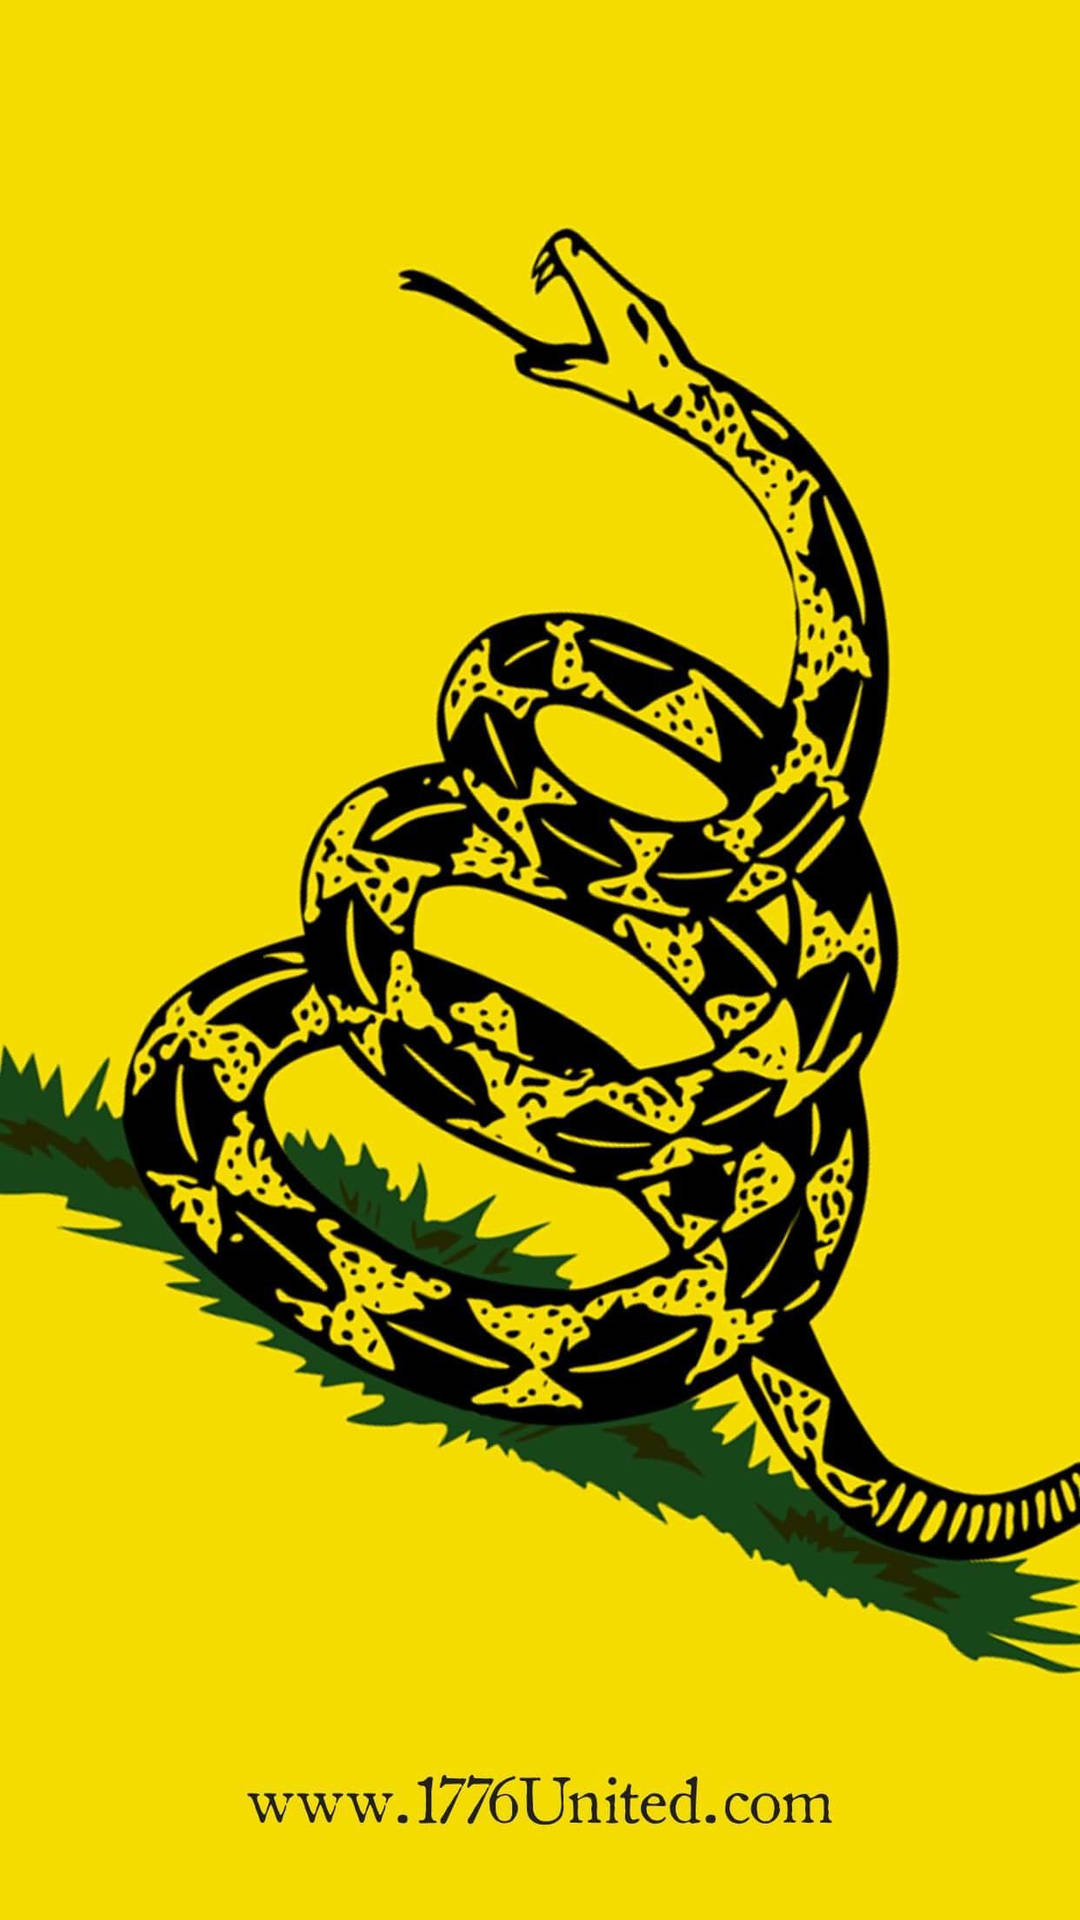 Gadsden Flag Snake Logo Inspiration Wallpaper